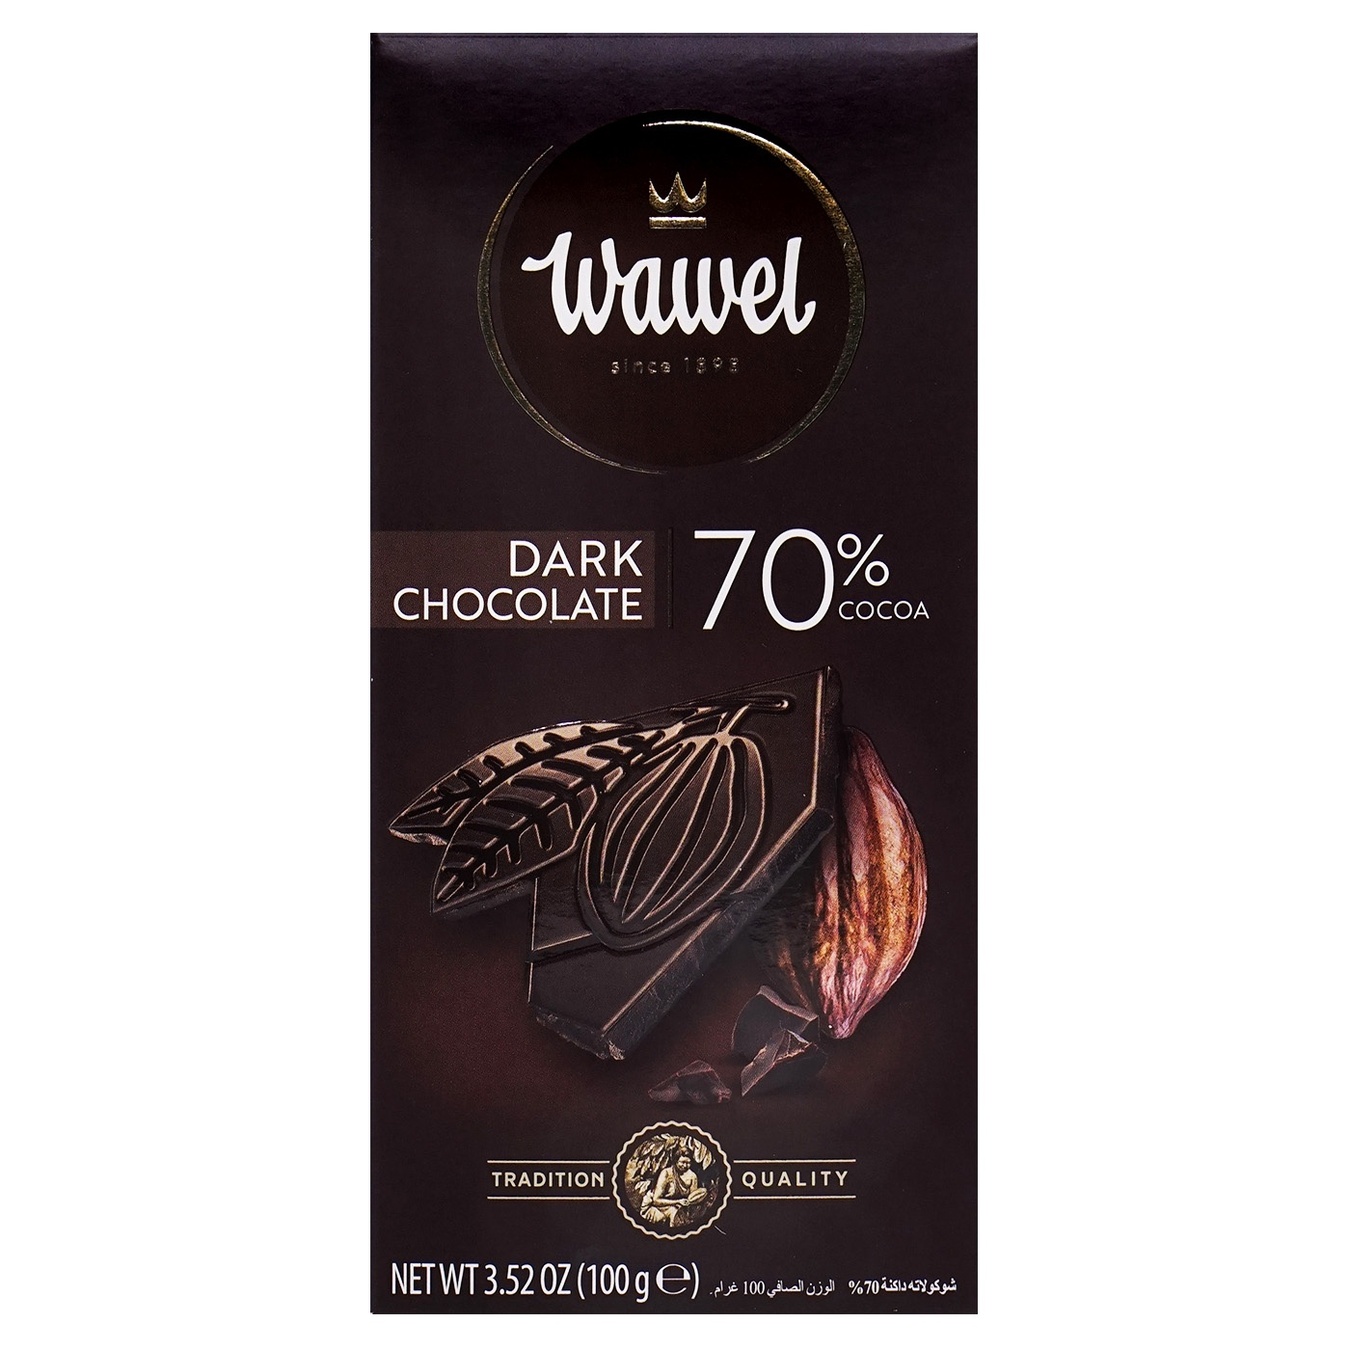 Wawel dark chocolate 70% cocoa 100g